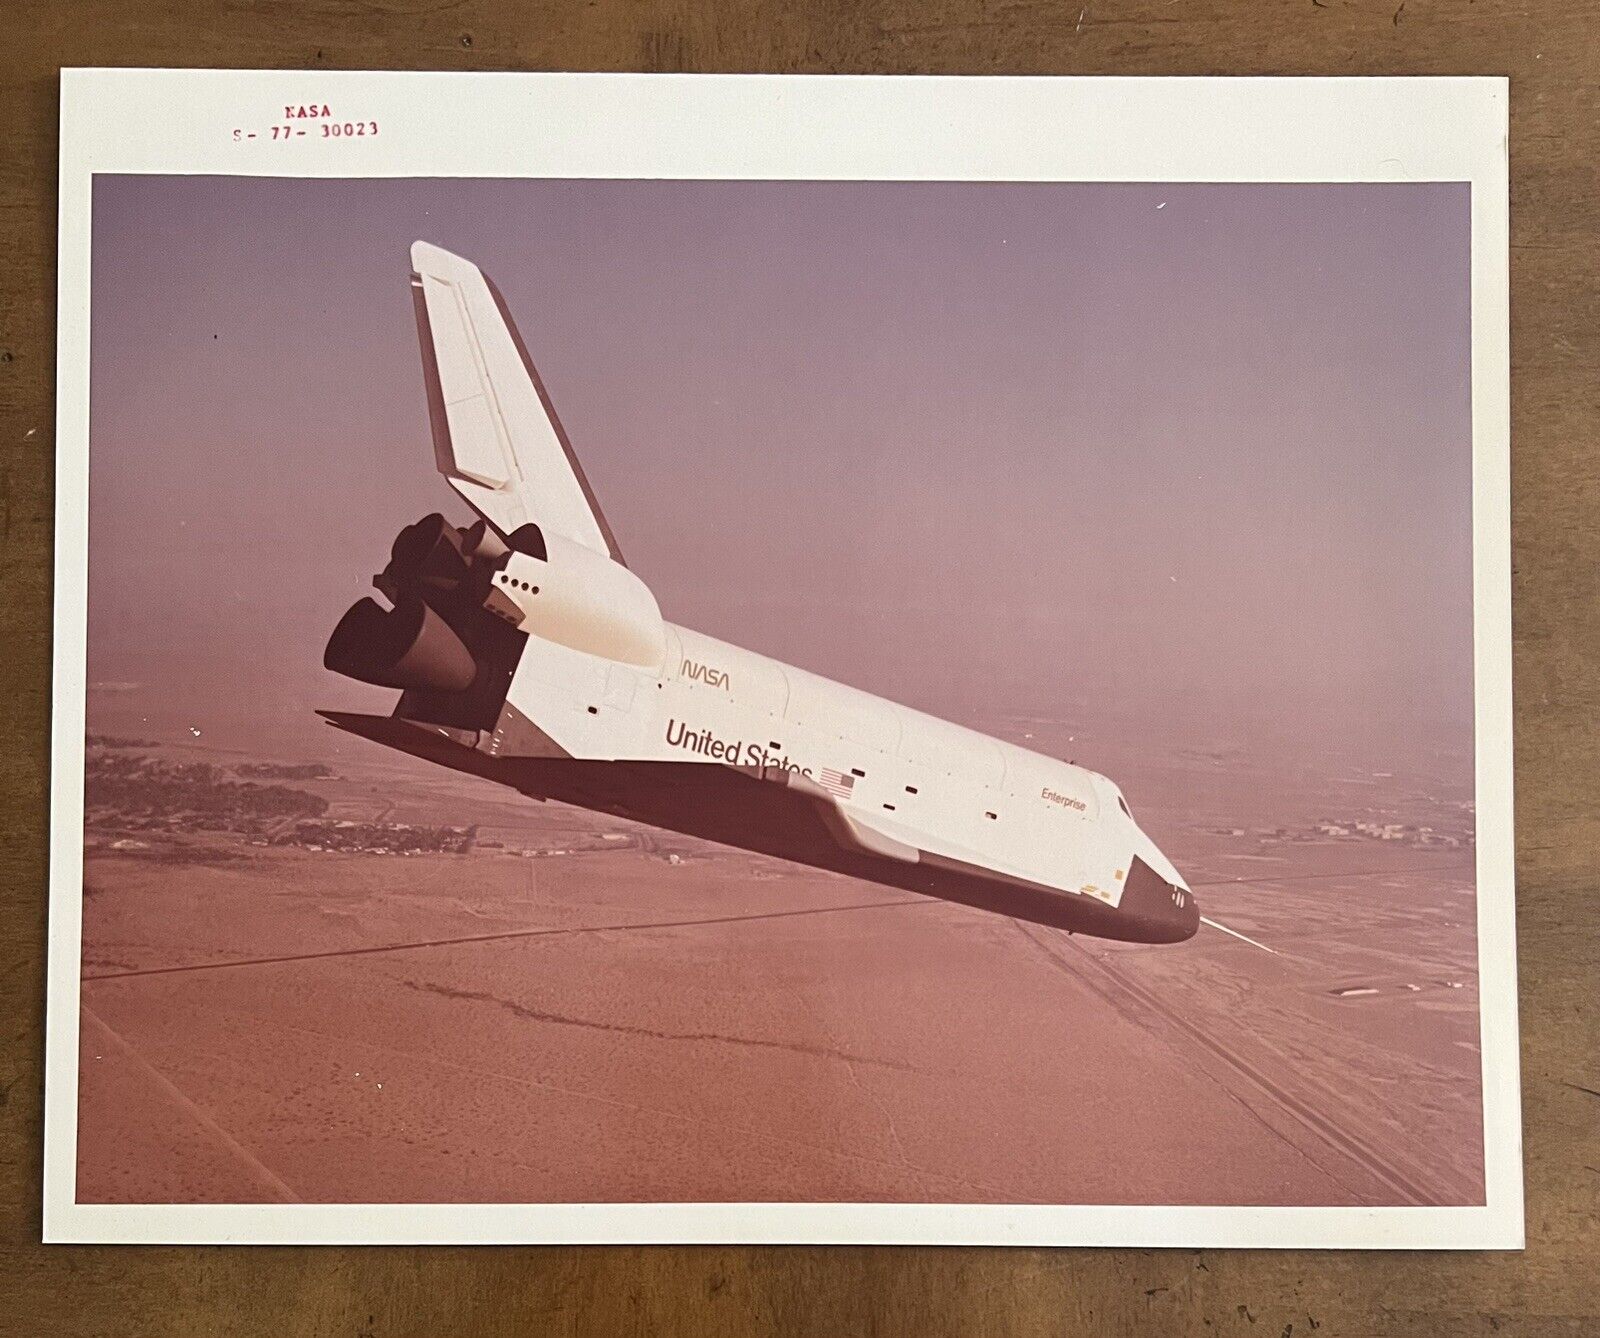 NASA Kodak Photo Red Number - S-77-30023 Enterprise Space Shuttle